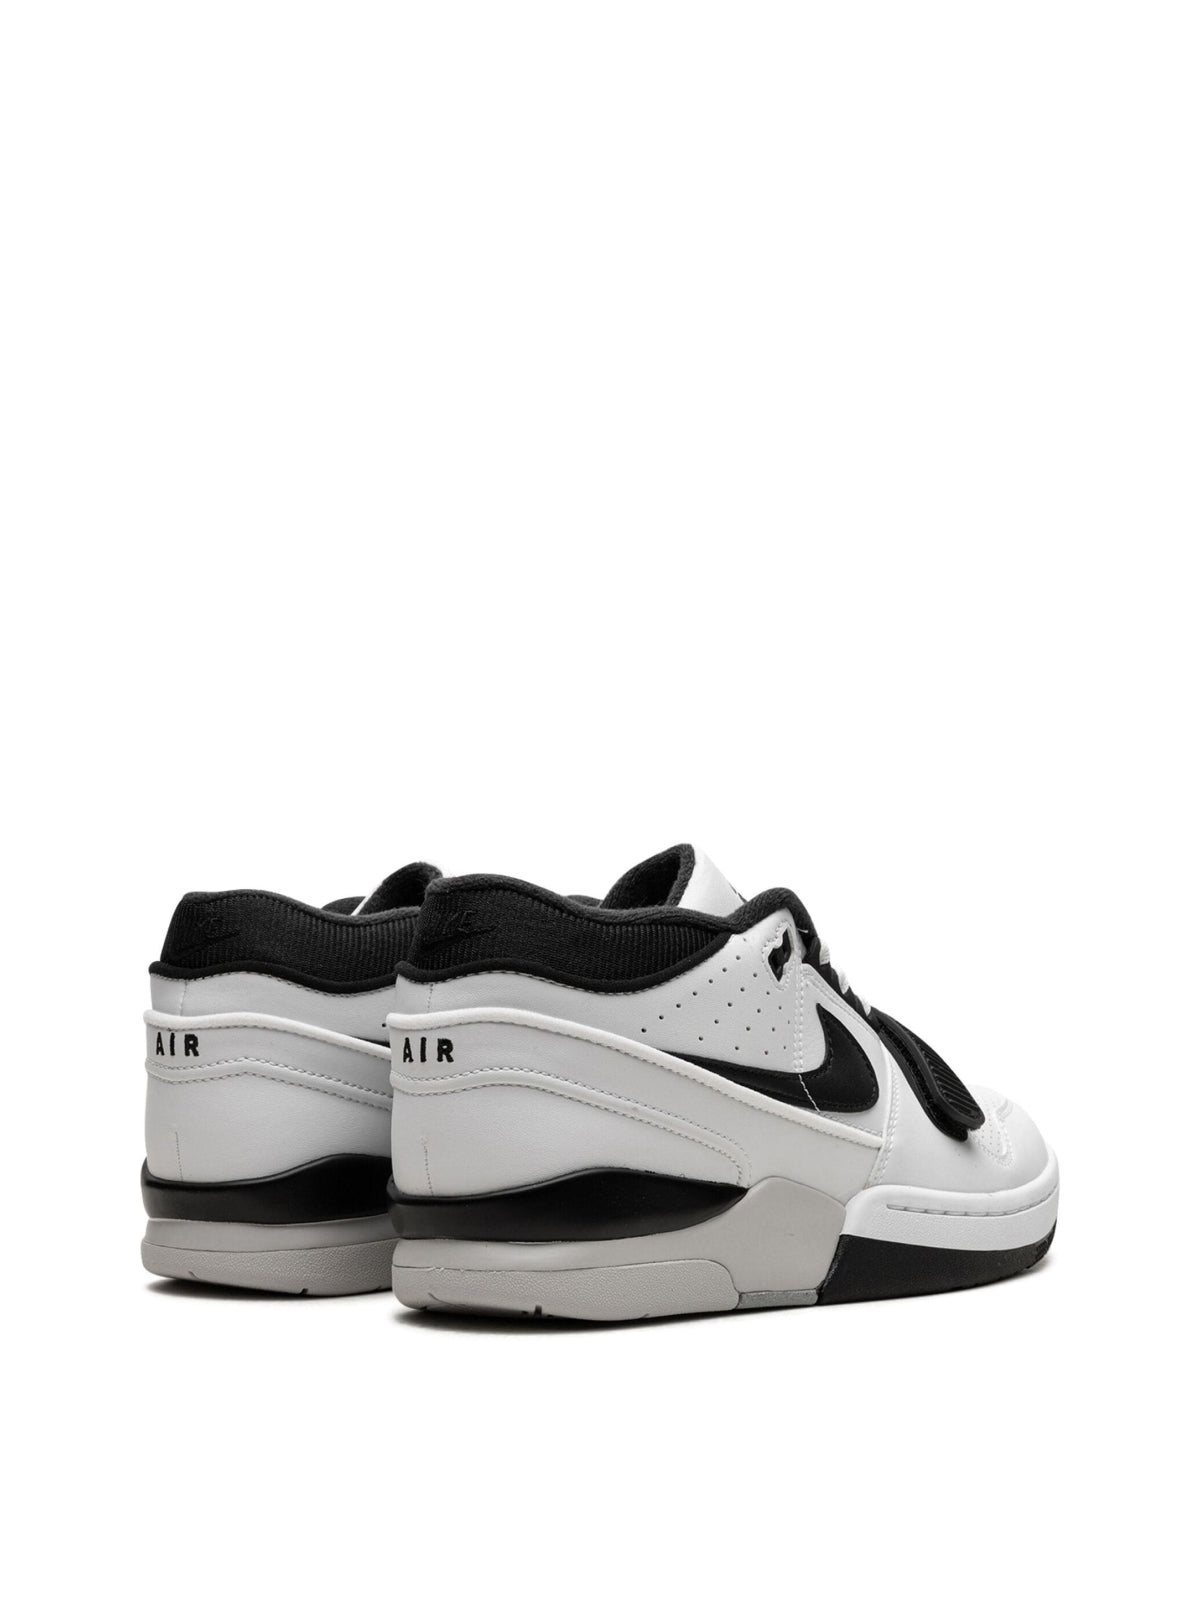 Nike-OUTLET-SALE-AAF88 SP x Billie Eilish Sneakers-ARCHIVIST